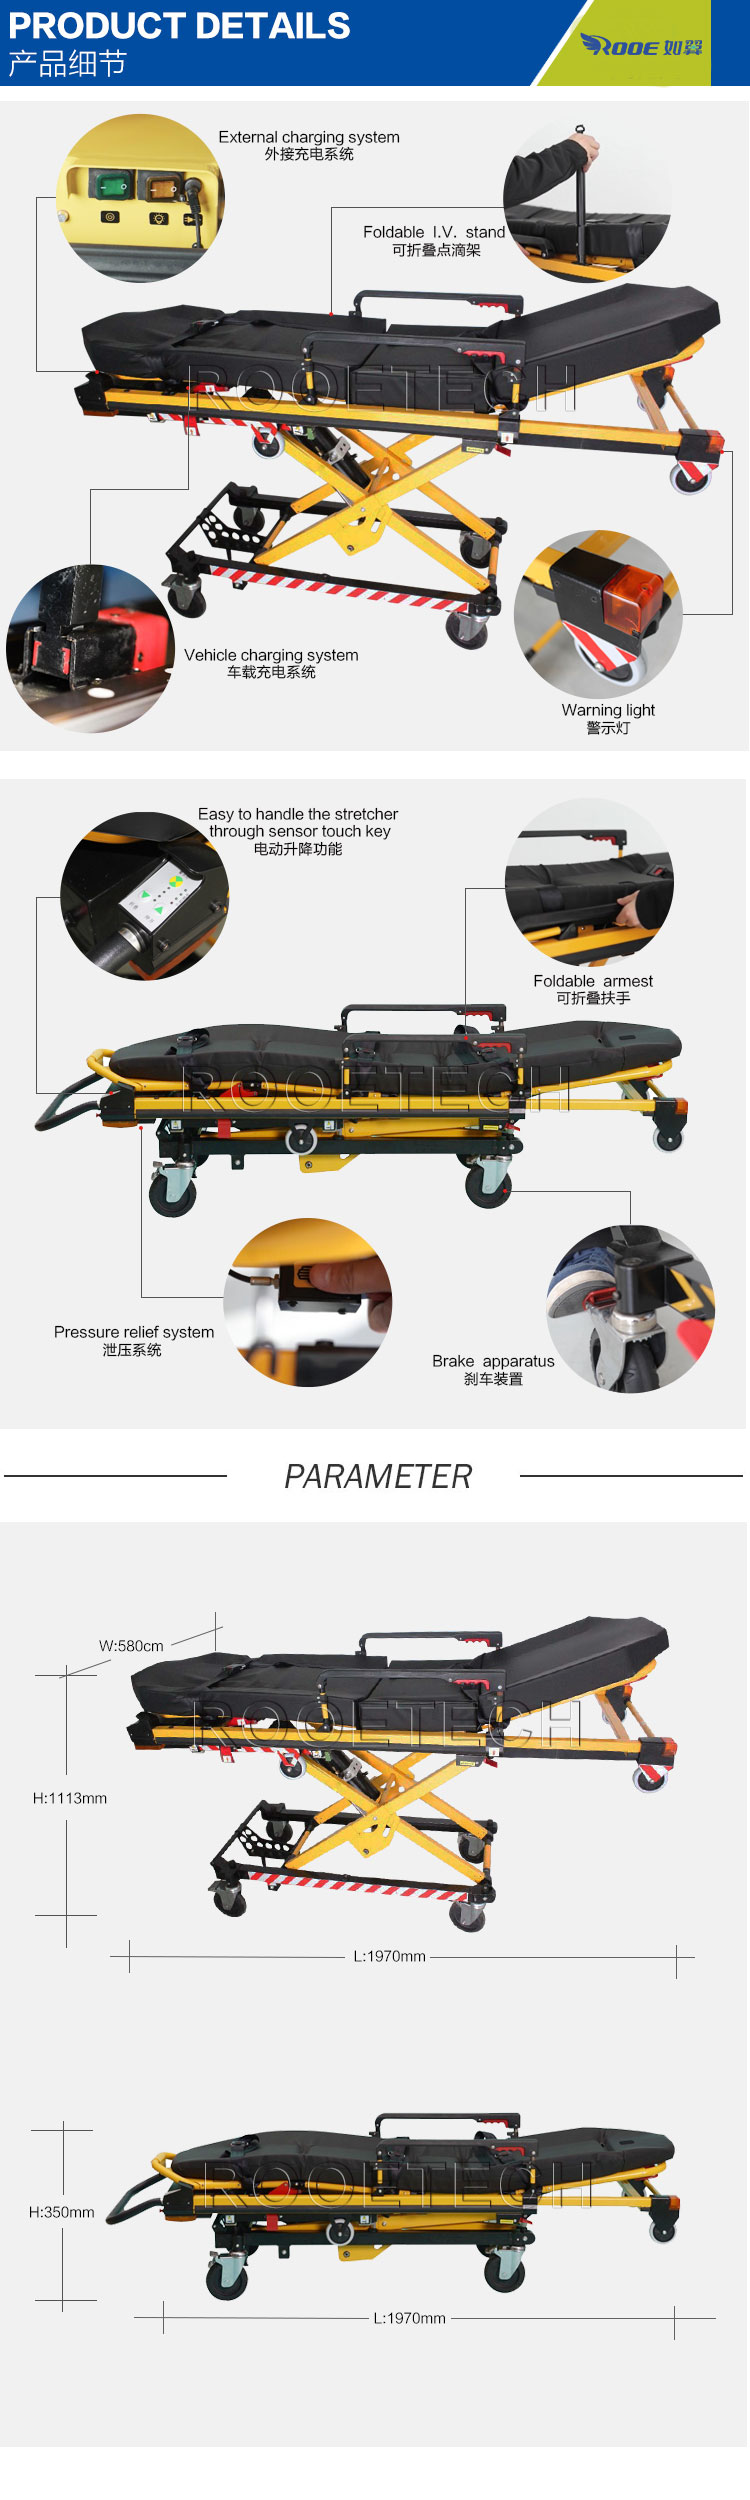 motorized stretcher, collapsible gurney, hydraulic ambulance stretcher